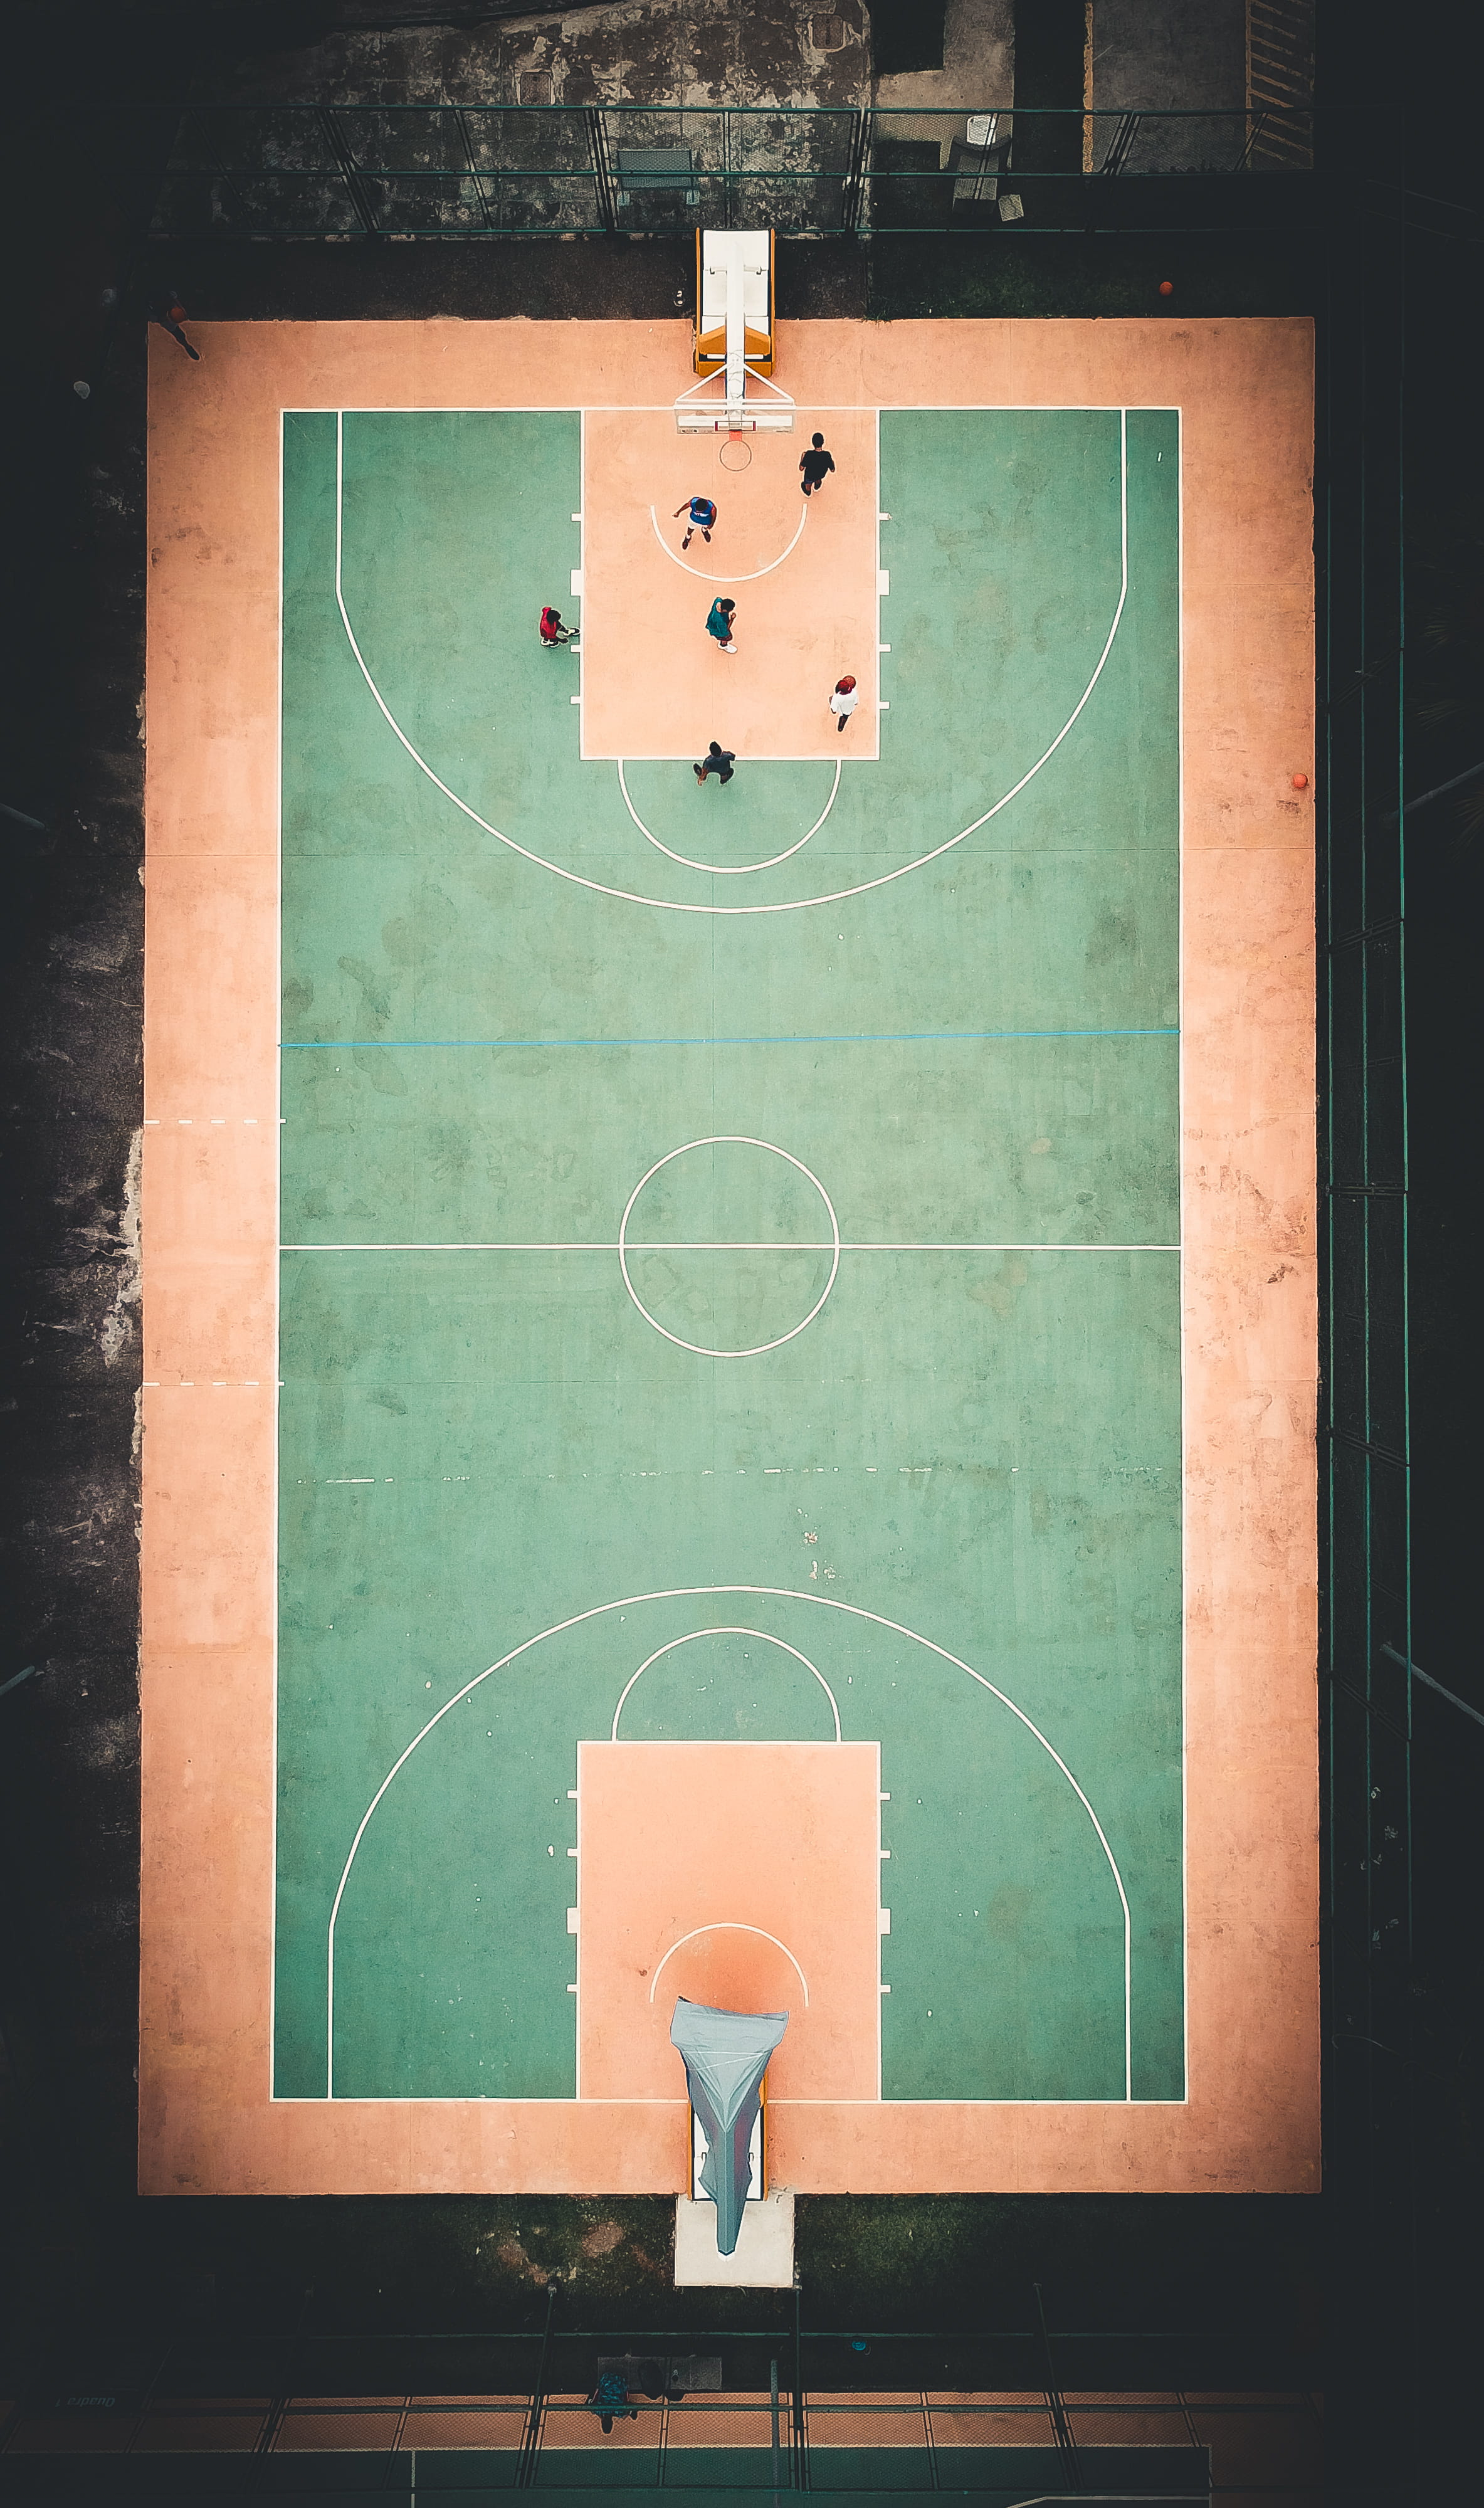 aerial view of basketball coutr, sport, team, team sport, sports